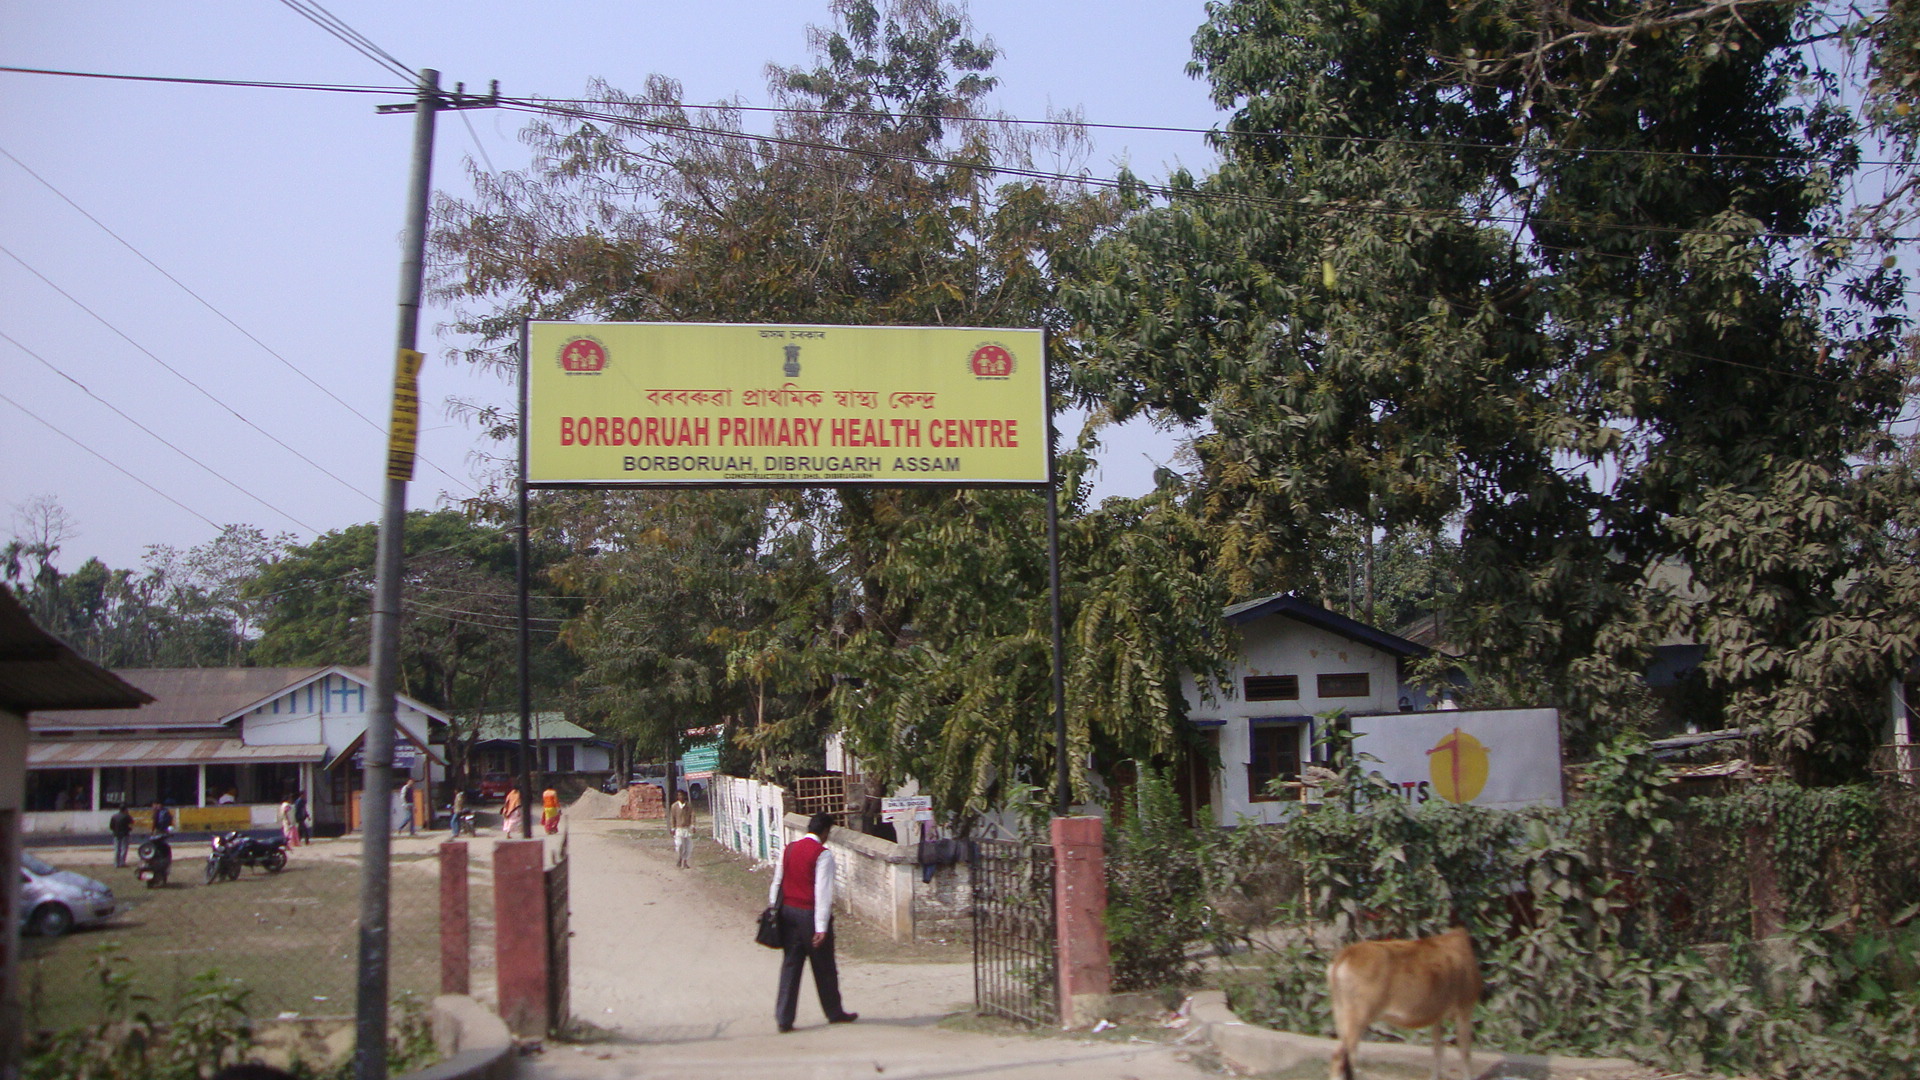 Barbaruah Primary Health Centre Entrance Gate - Barbaruah (Dibrugarh)